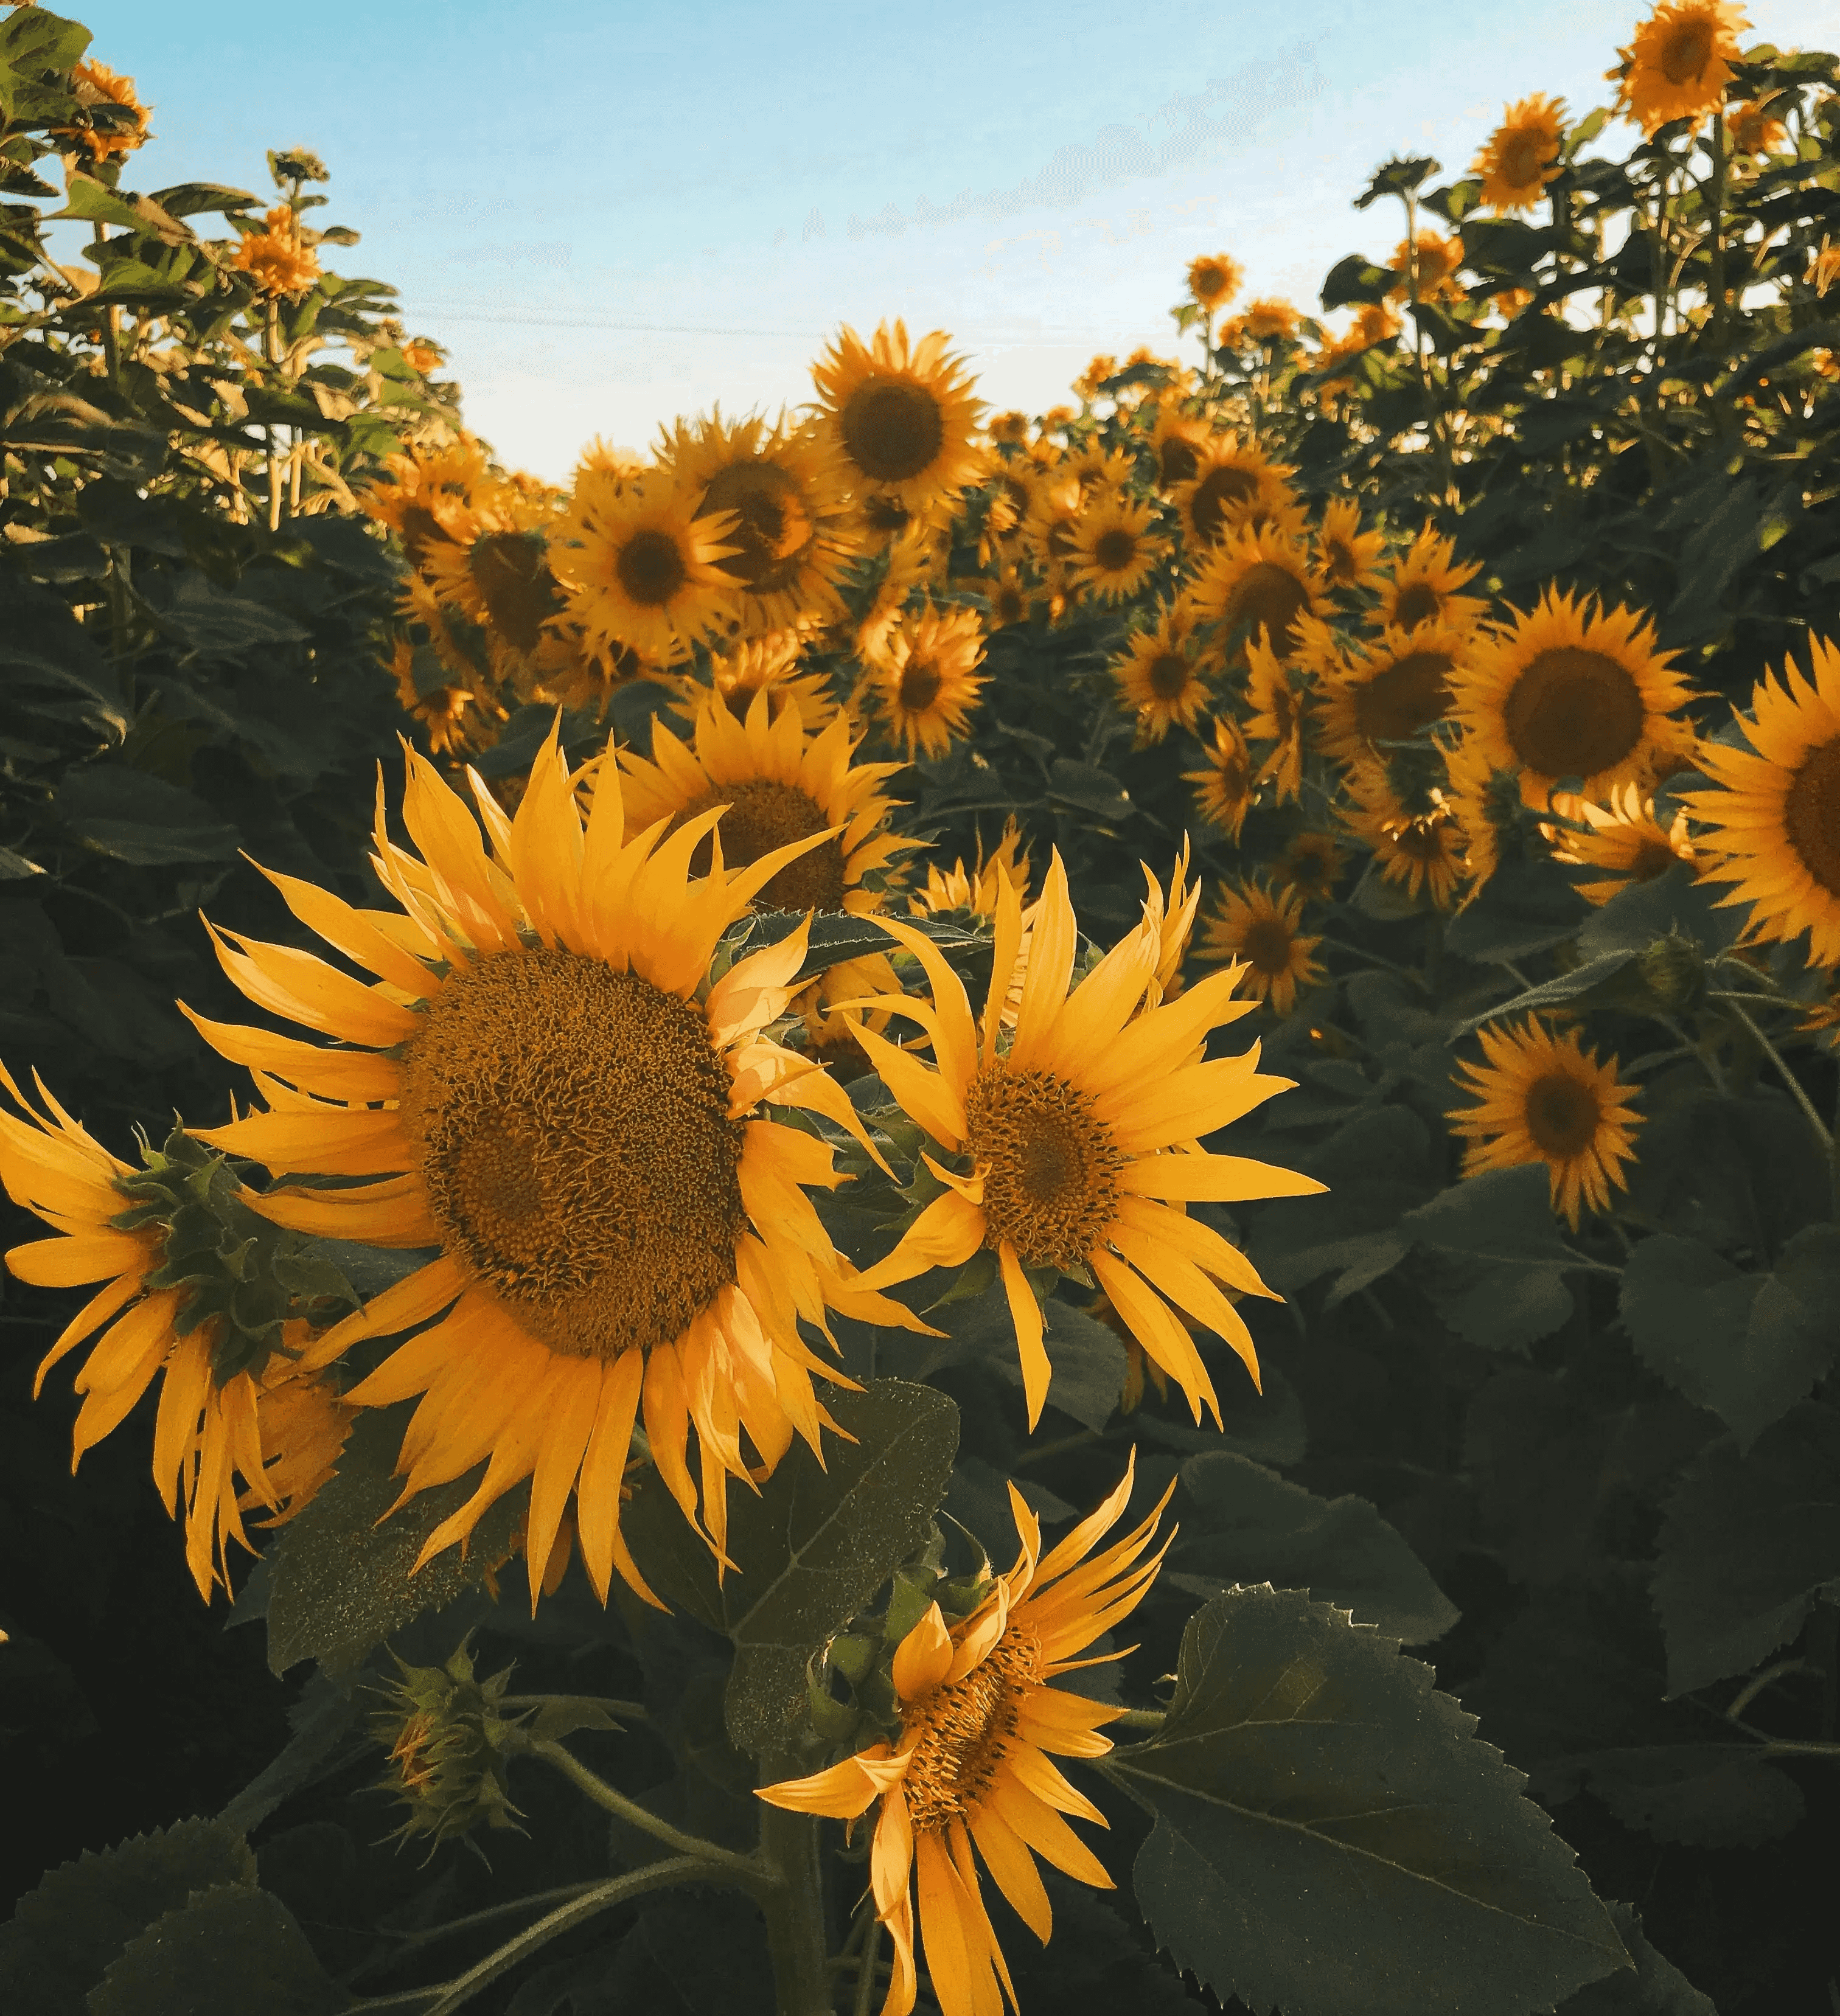 A field of sunflowers. Image by Sofia Ornelas.